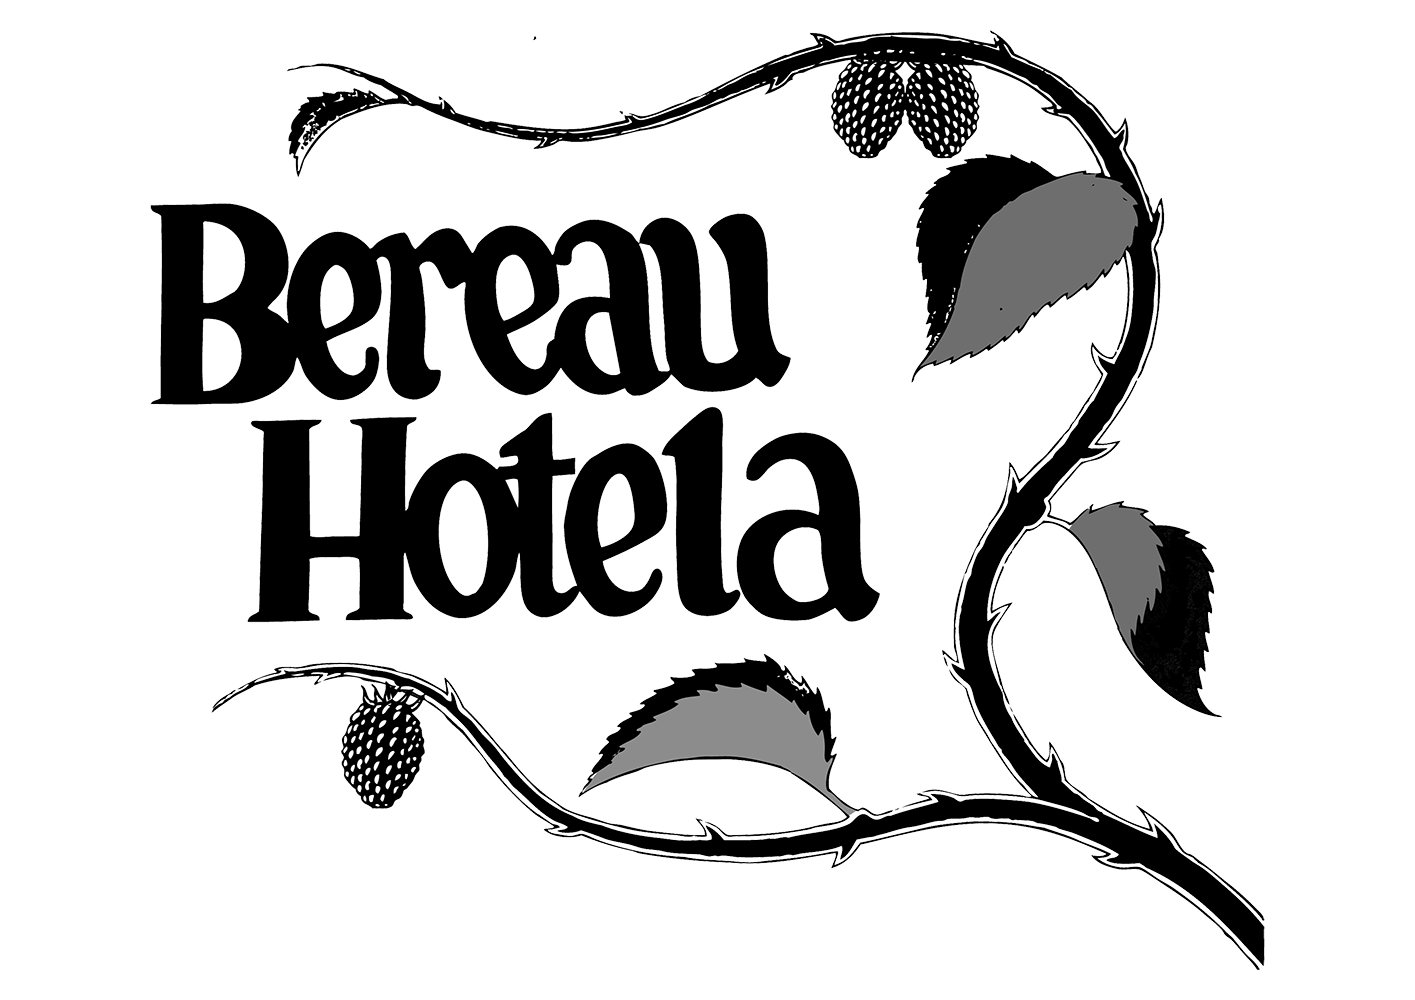 Hotel Rural Bereau